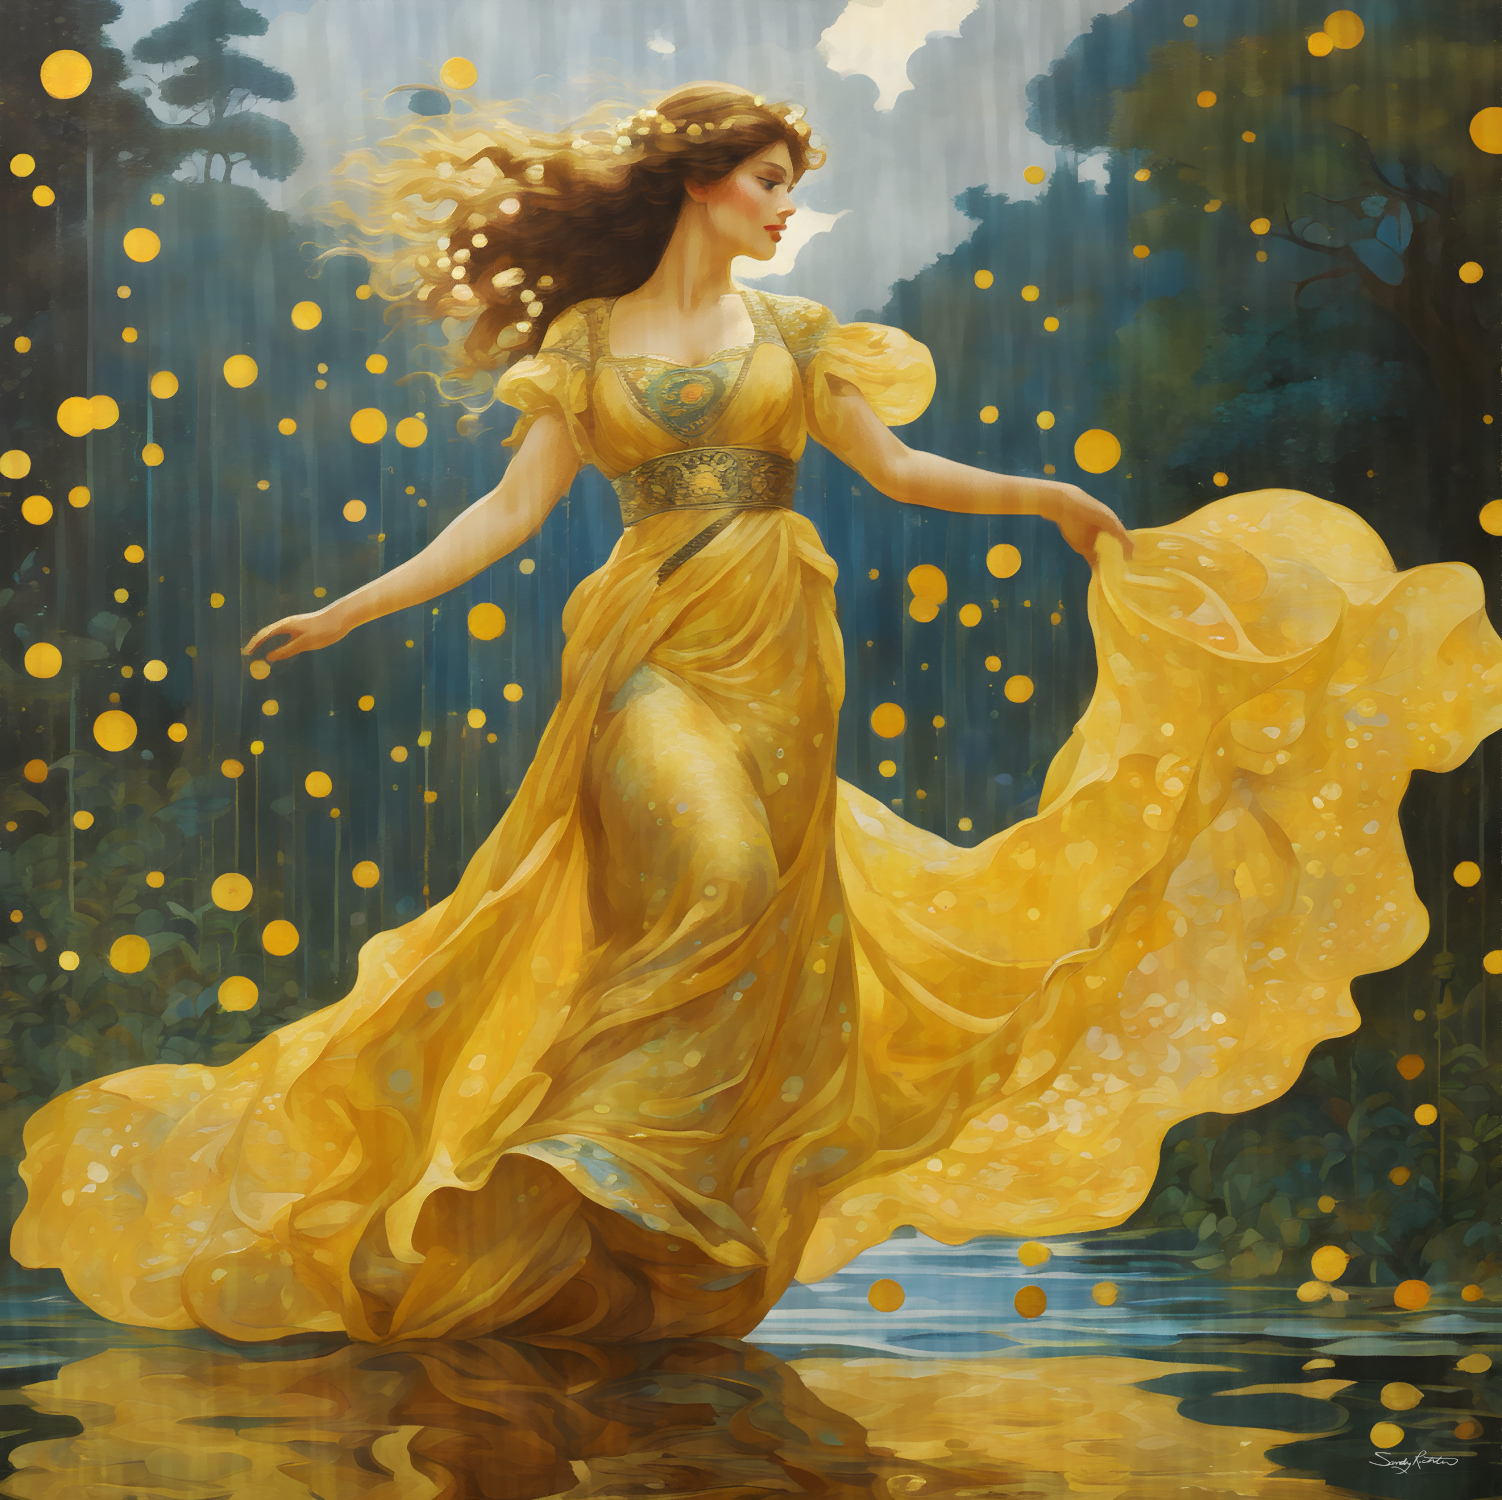 Beautiful Woman Dancing in the Rain Painting Dancing in the rain never looked so beautiful 💃🌧